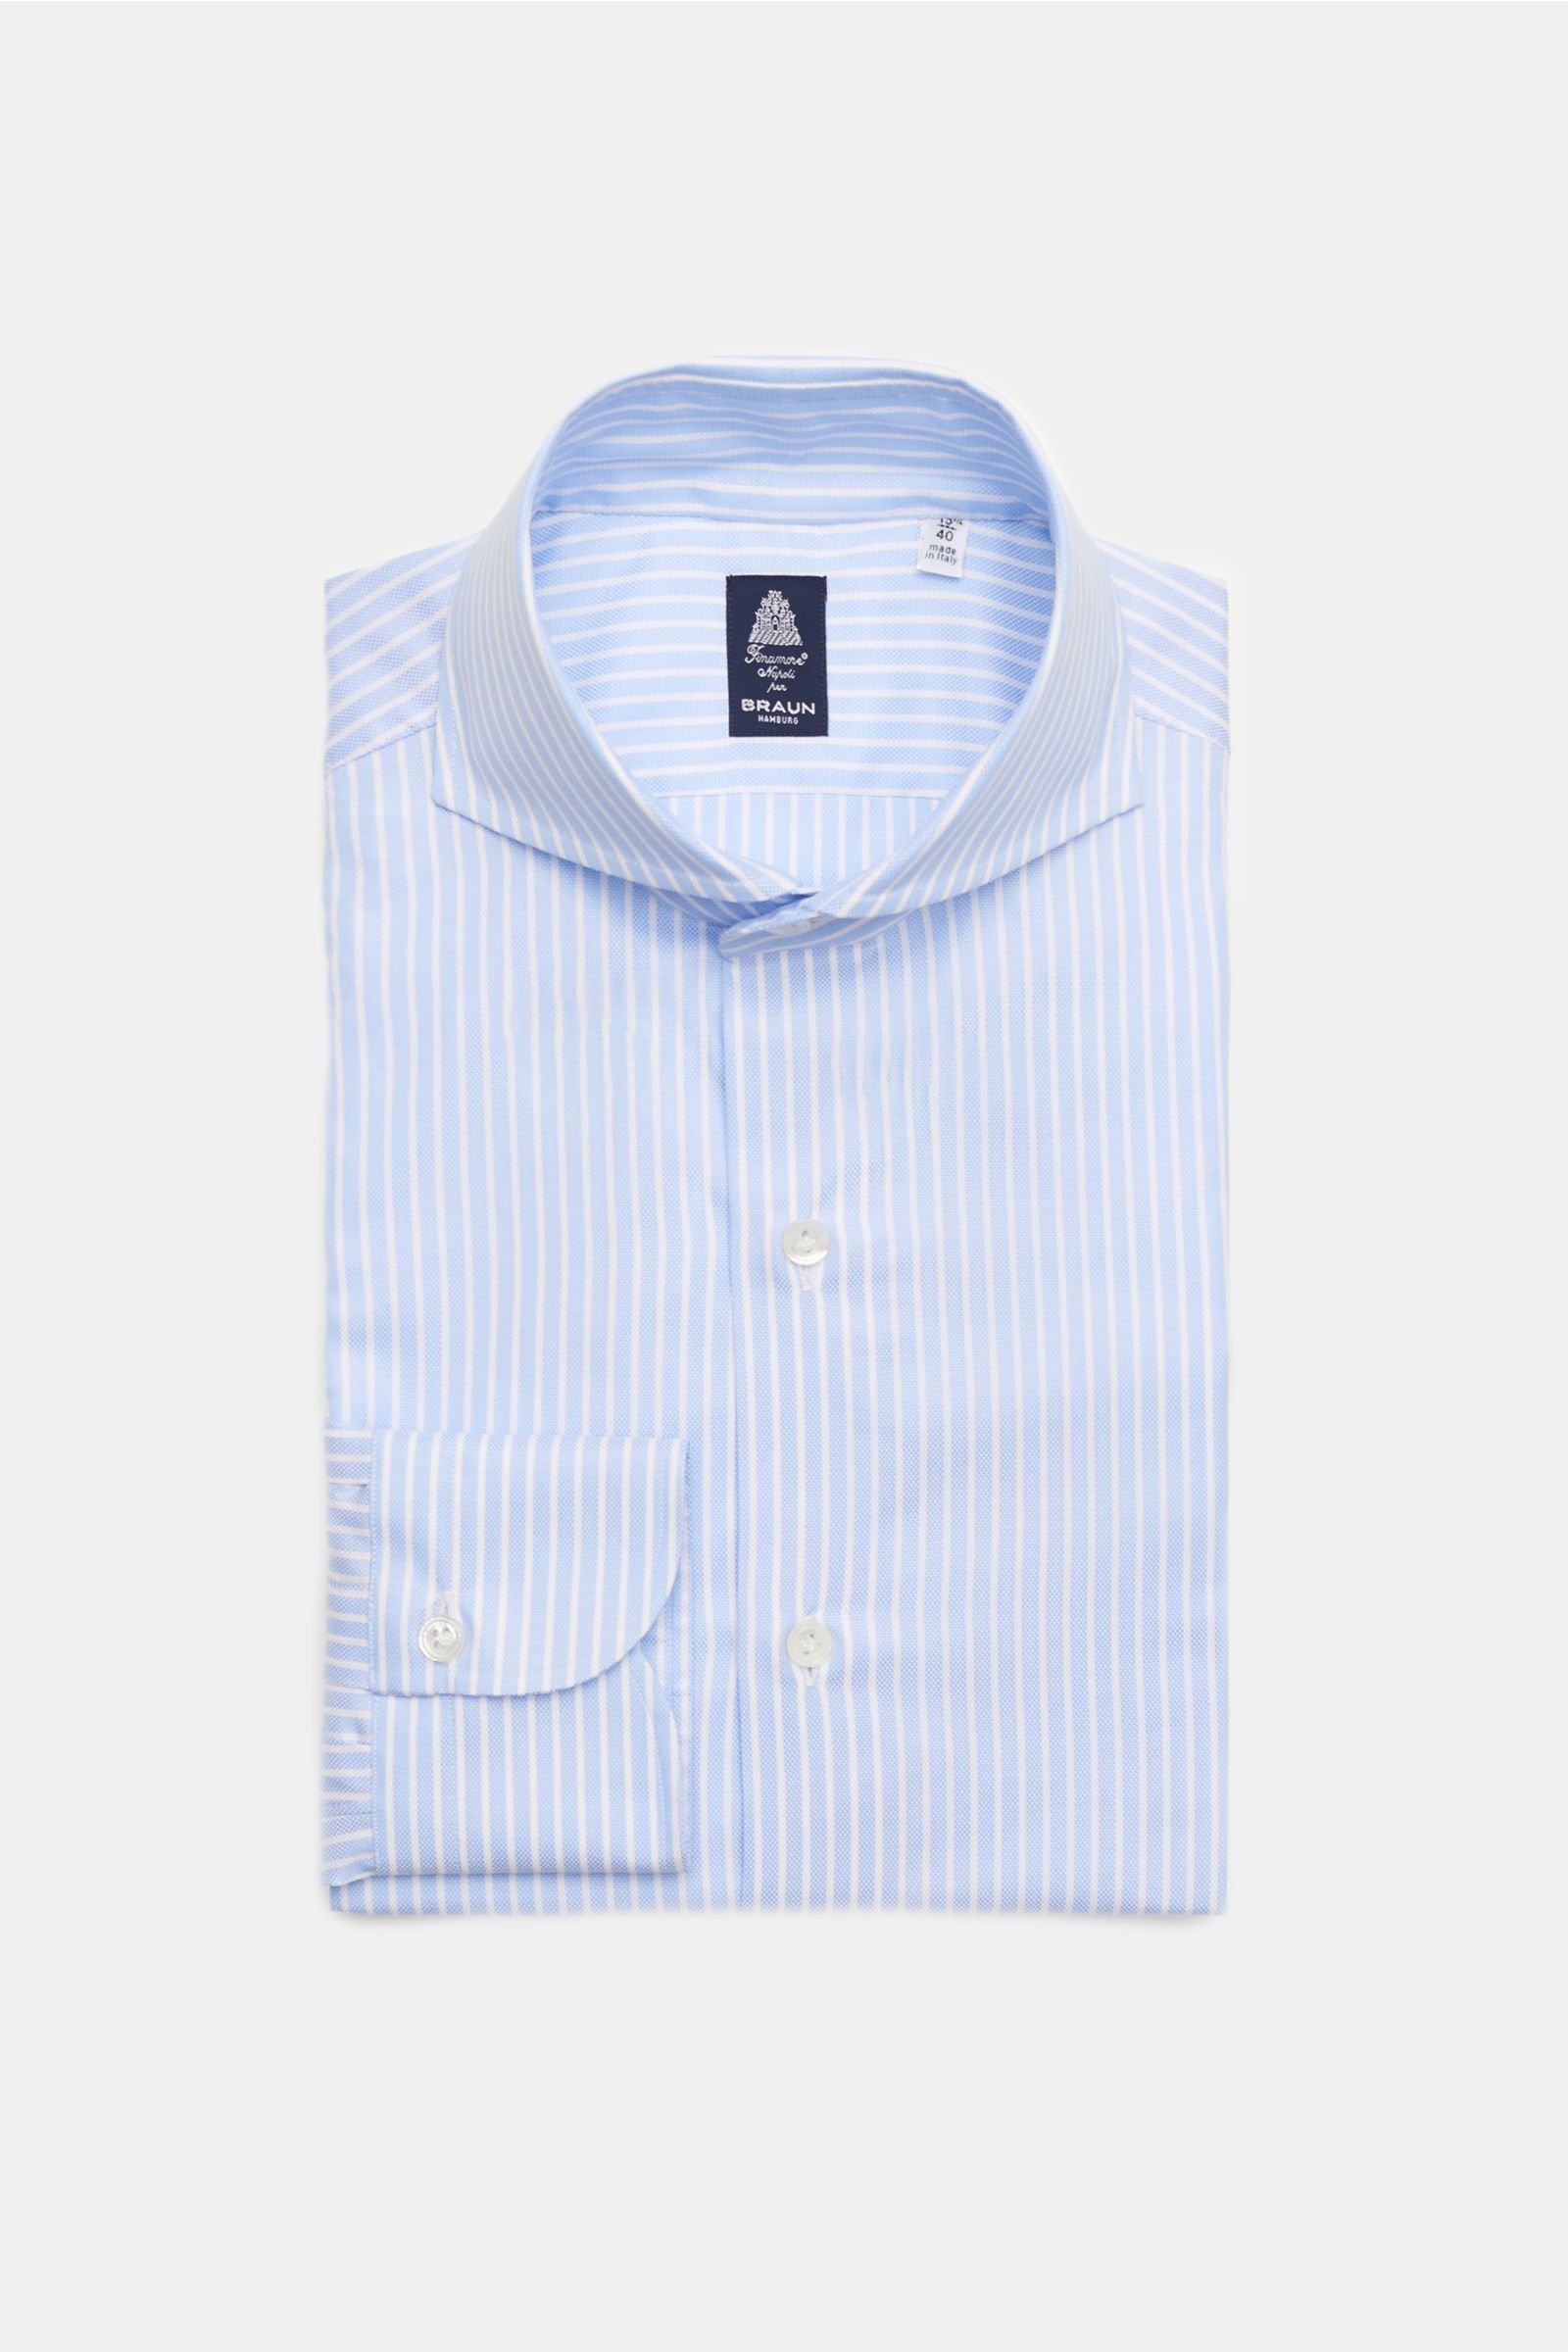 Oxford shirt 'Sergio Napoli' shark collar light blue/white striped 